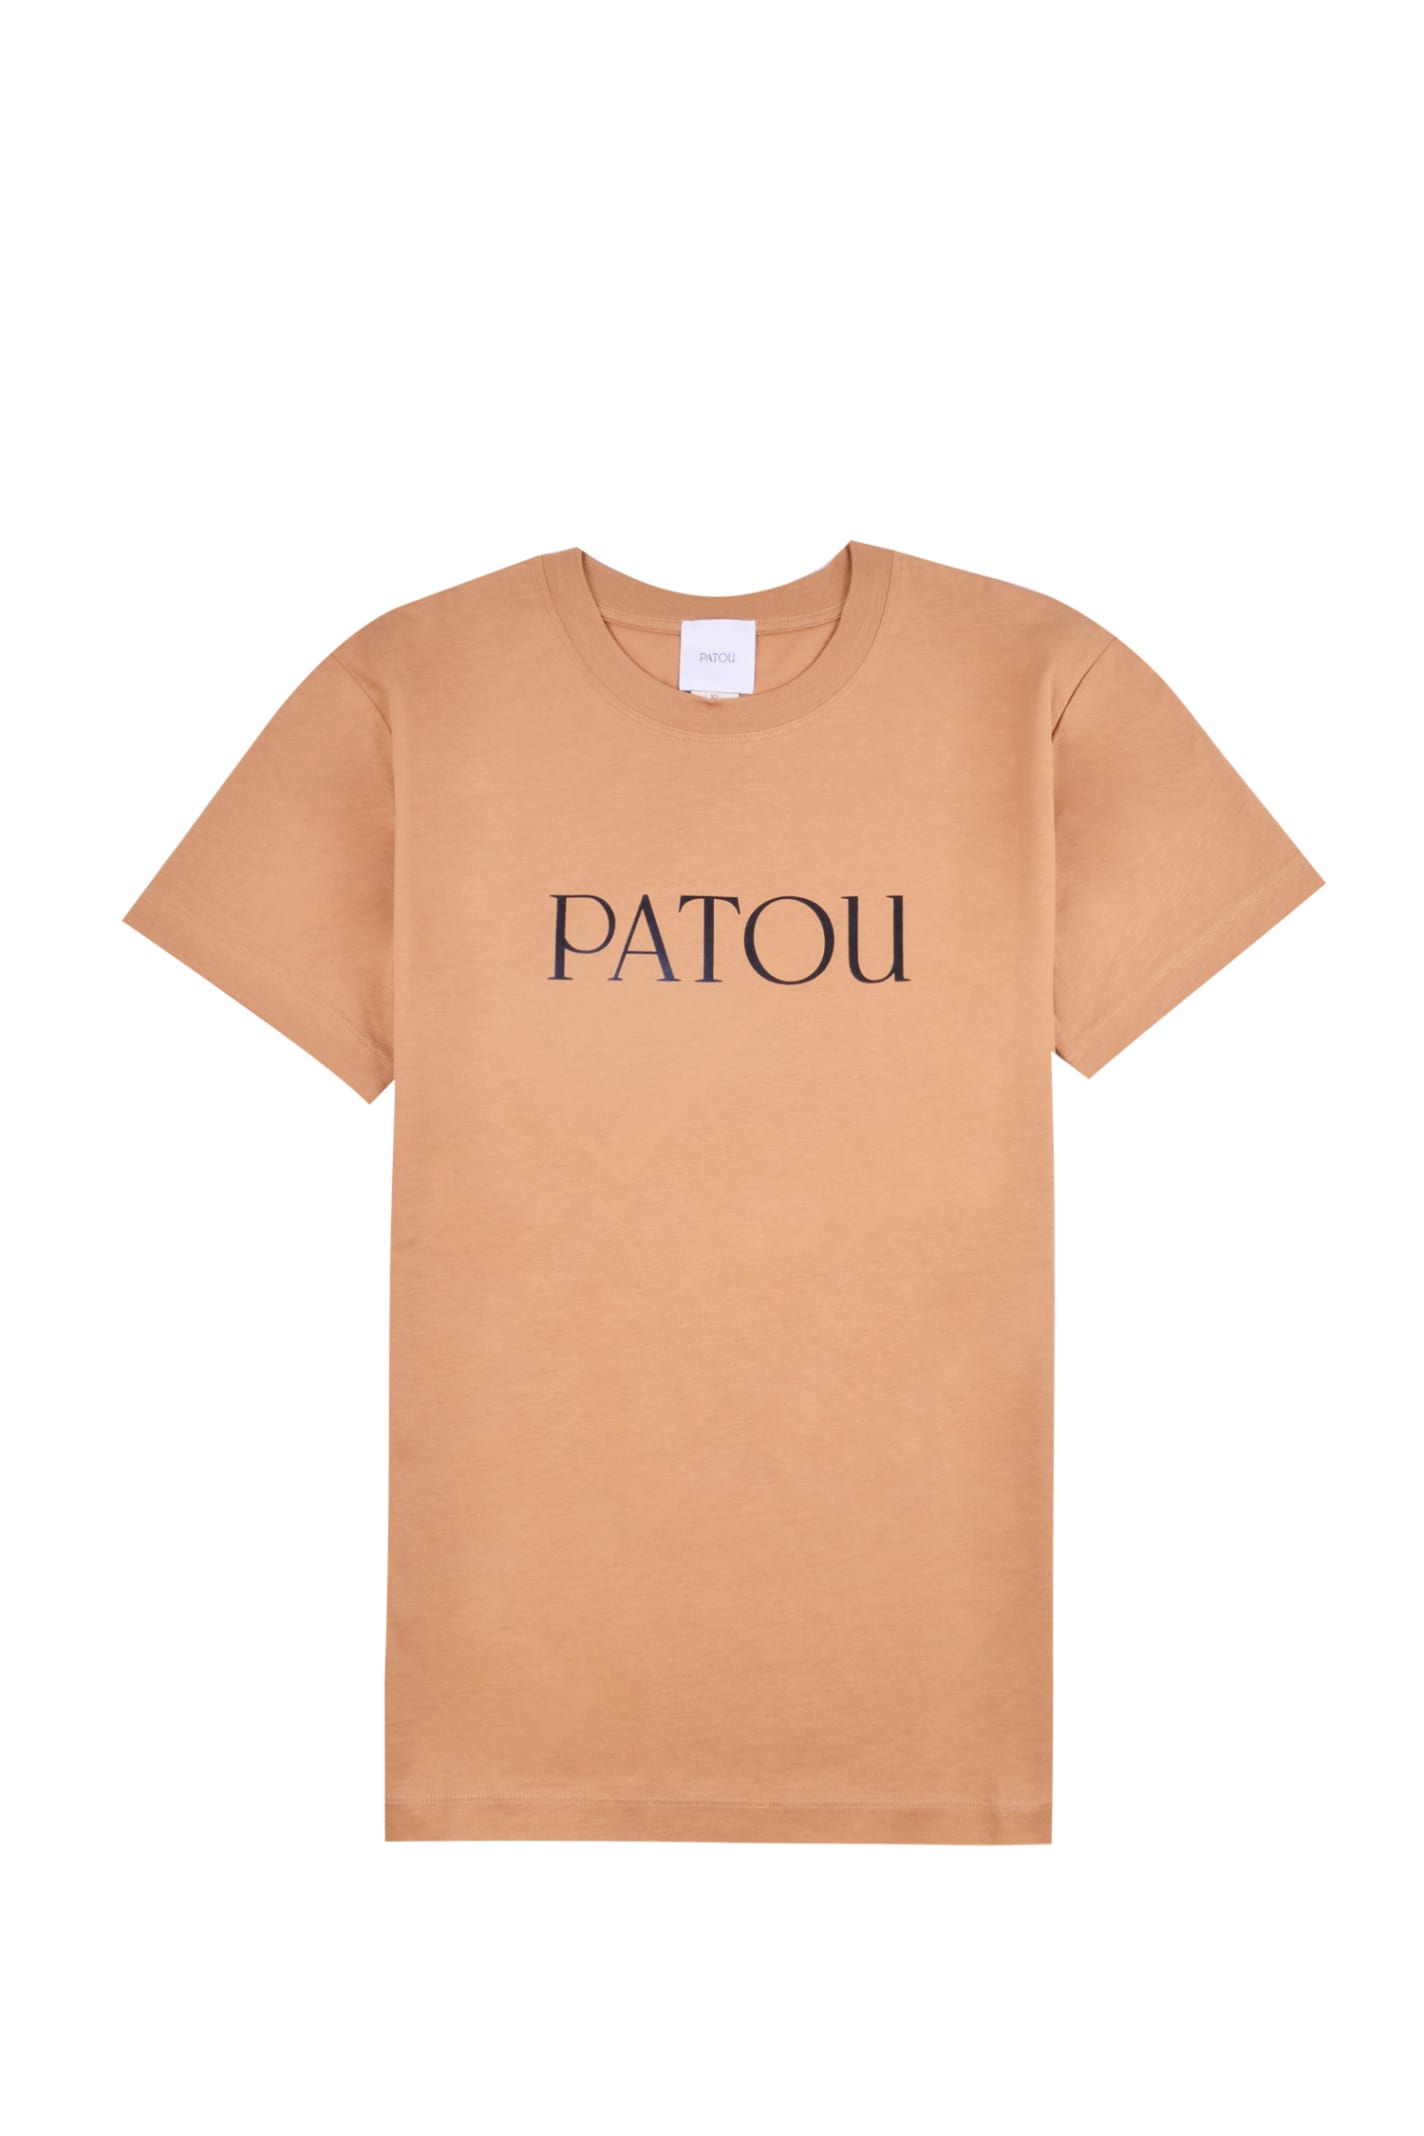 Patou T-shirt With Print